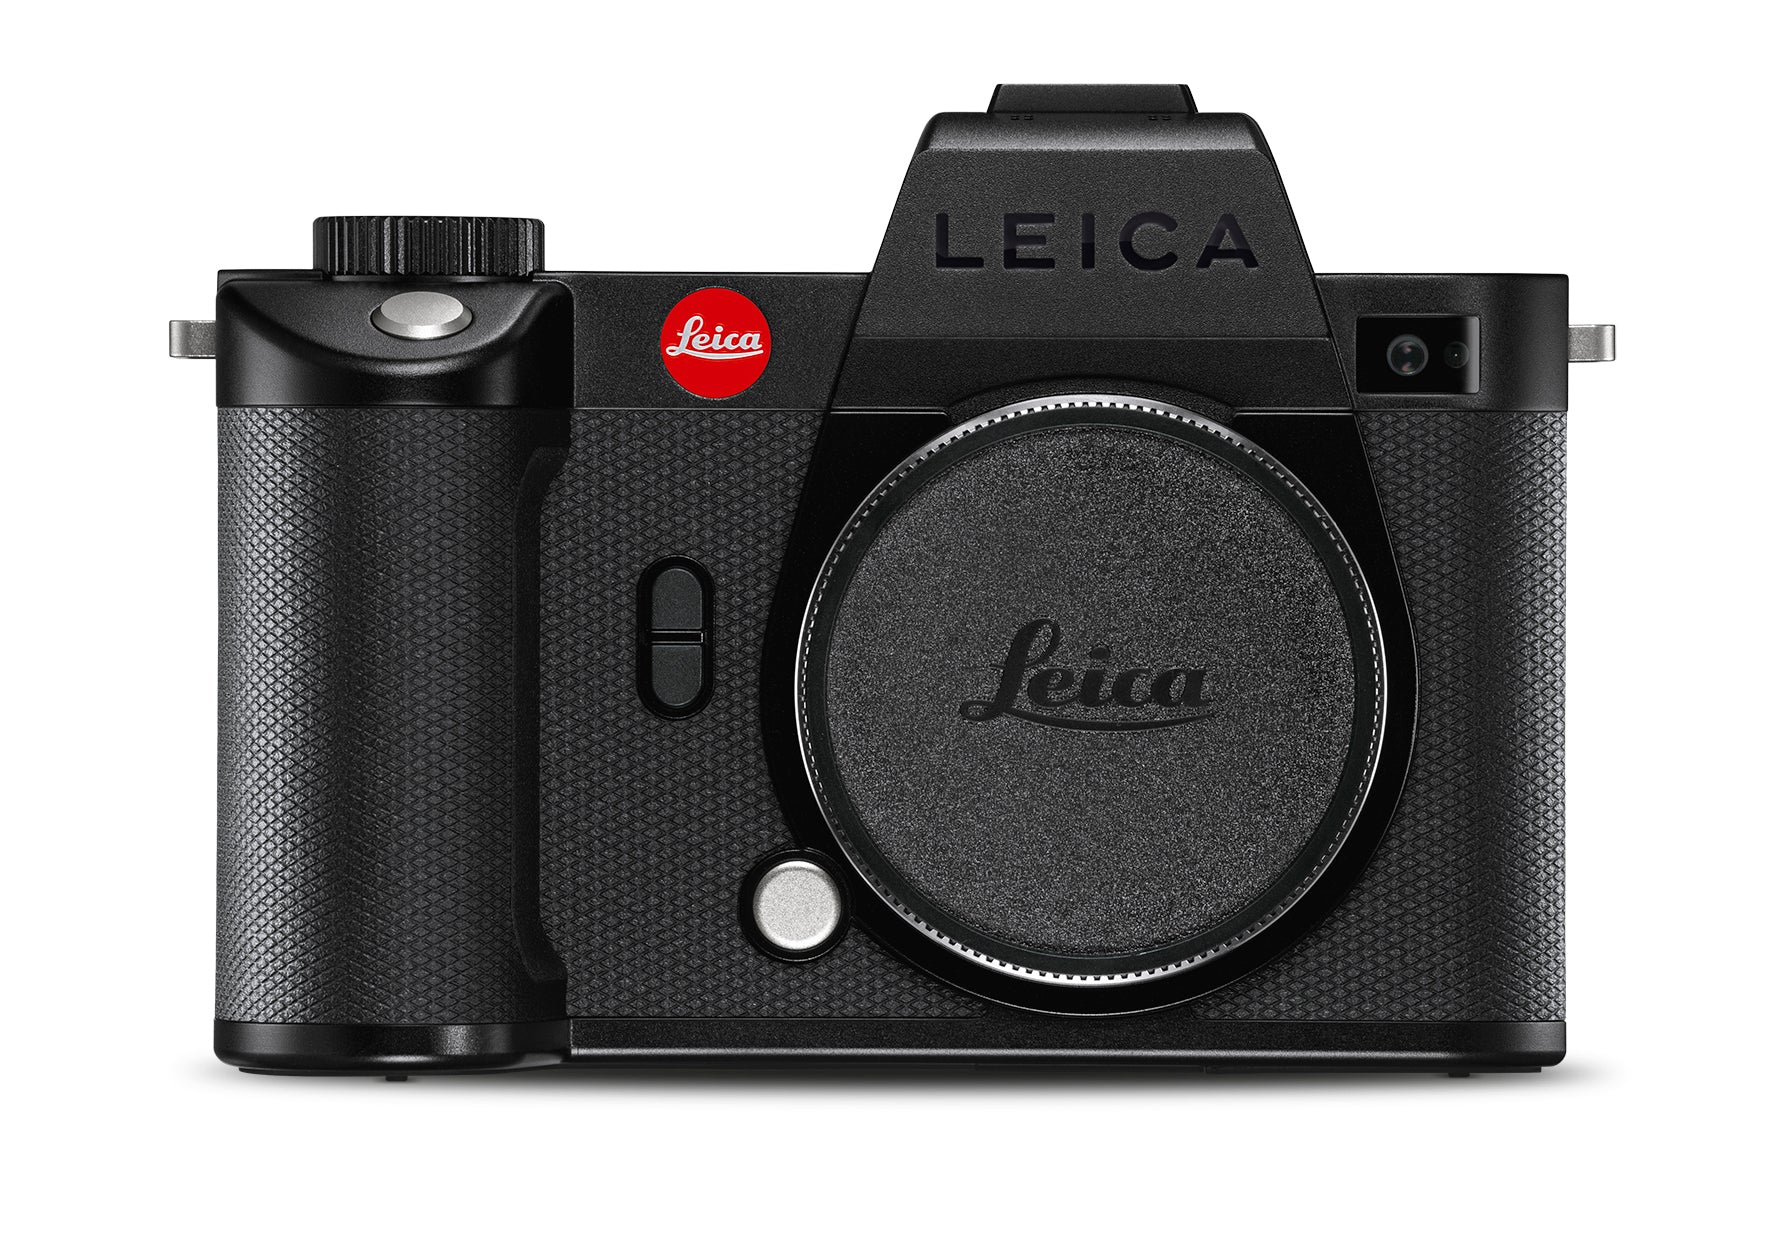 Leica SL2-S, black, Version ROW